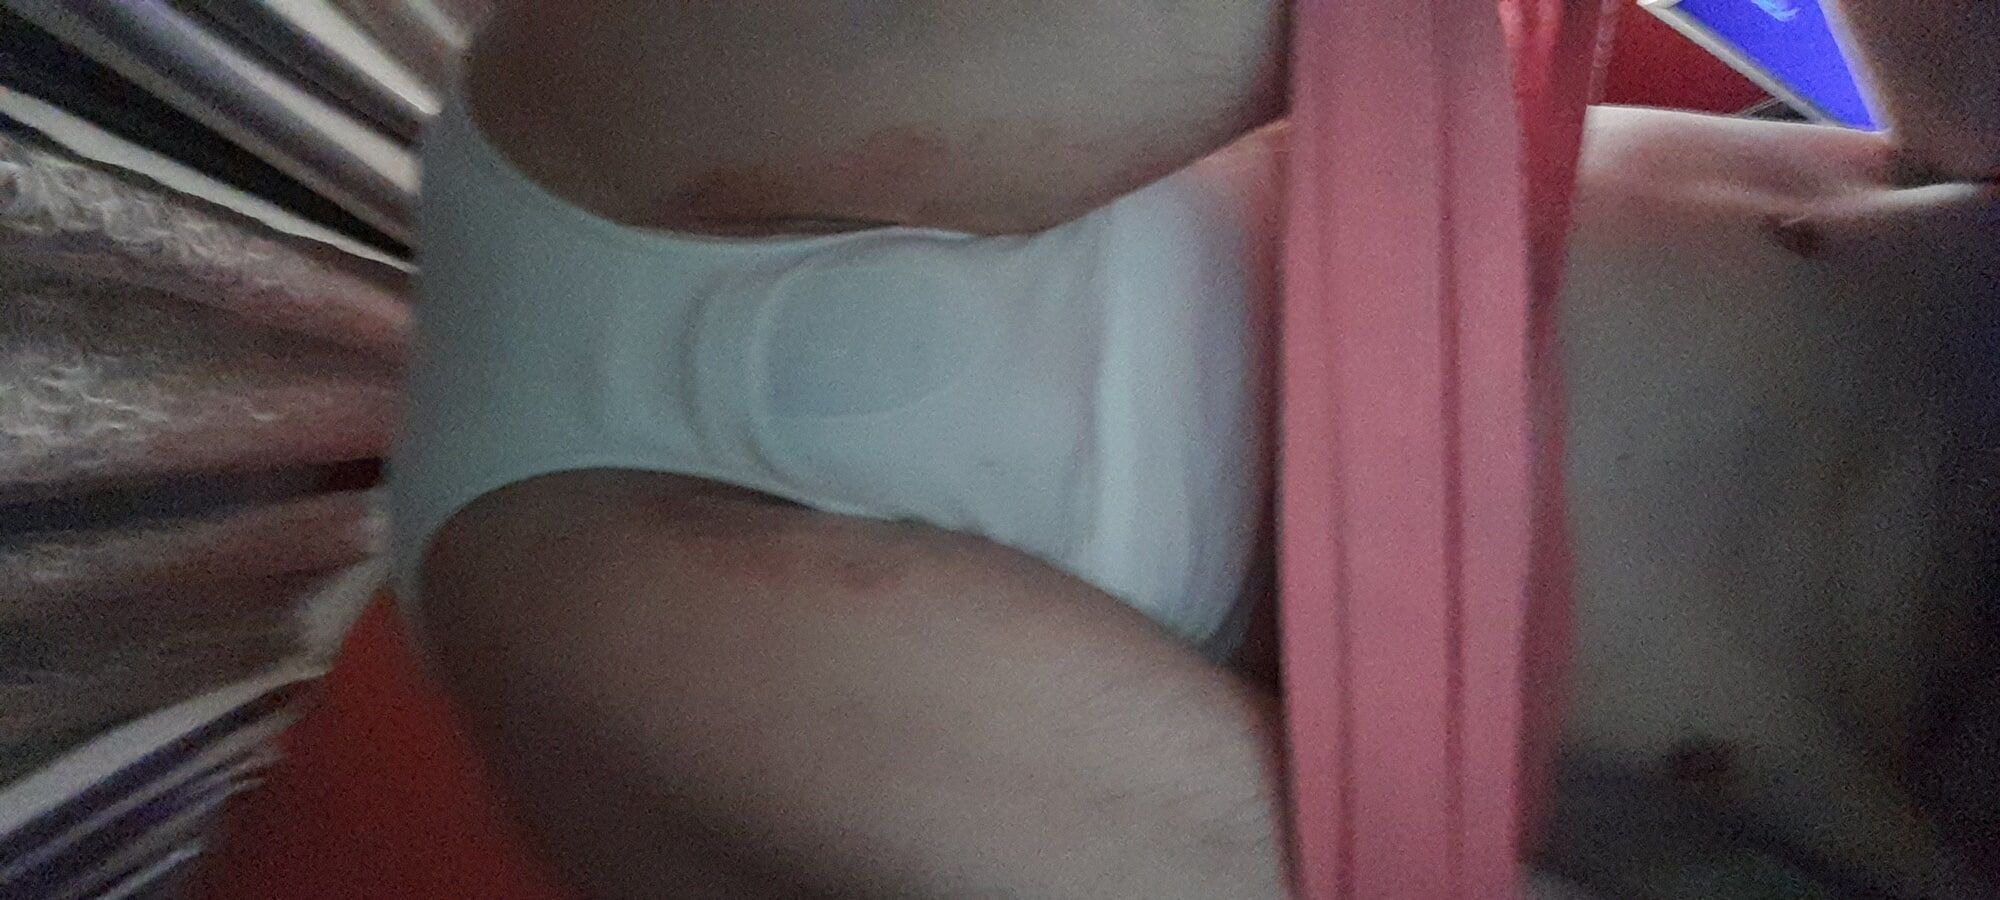 My panties fetish #9